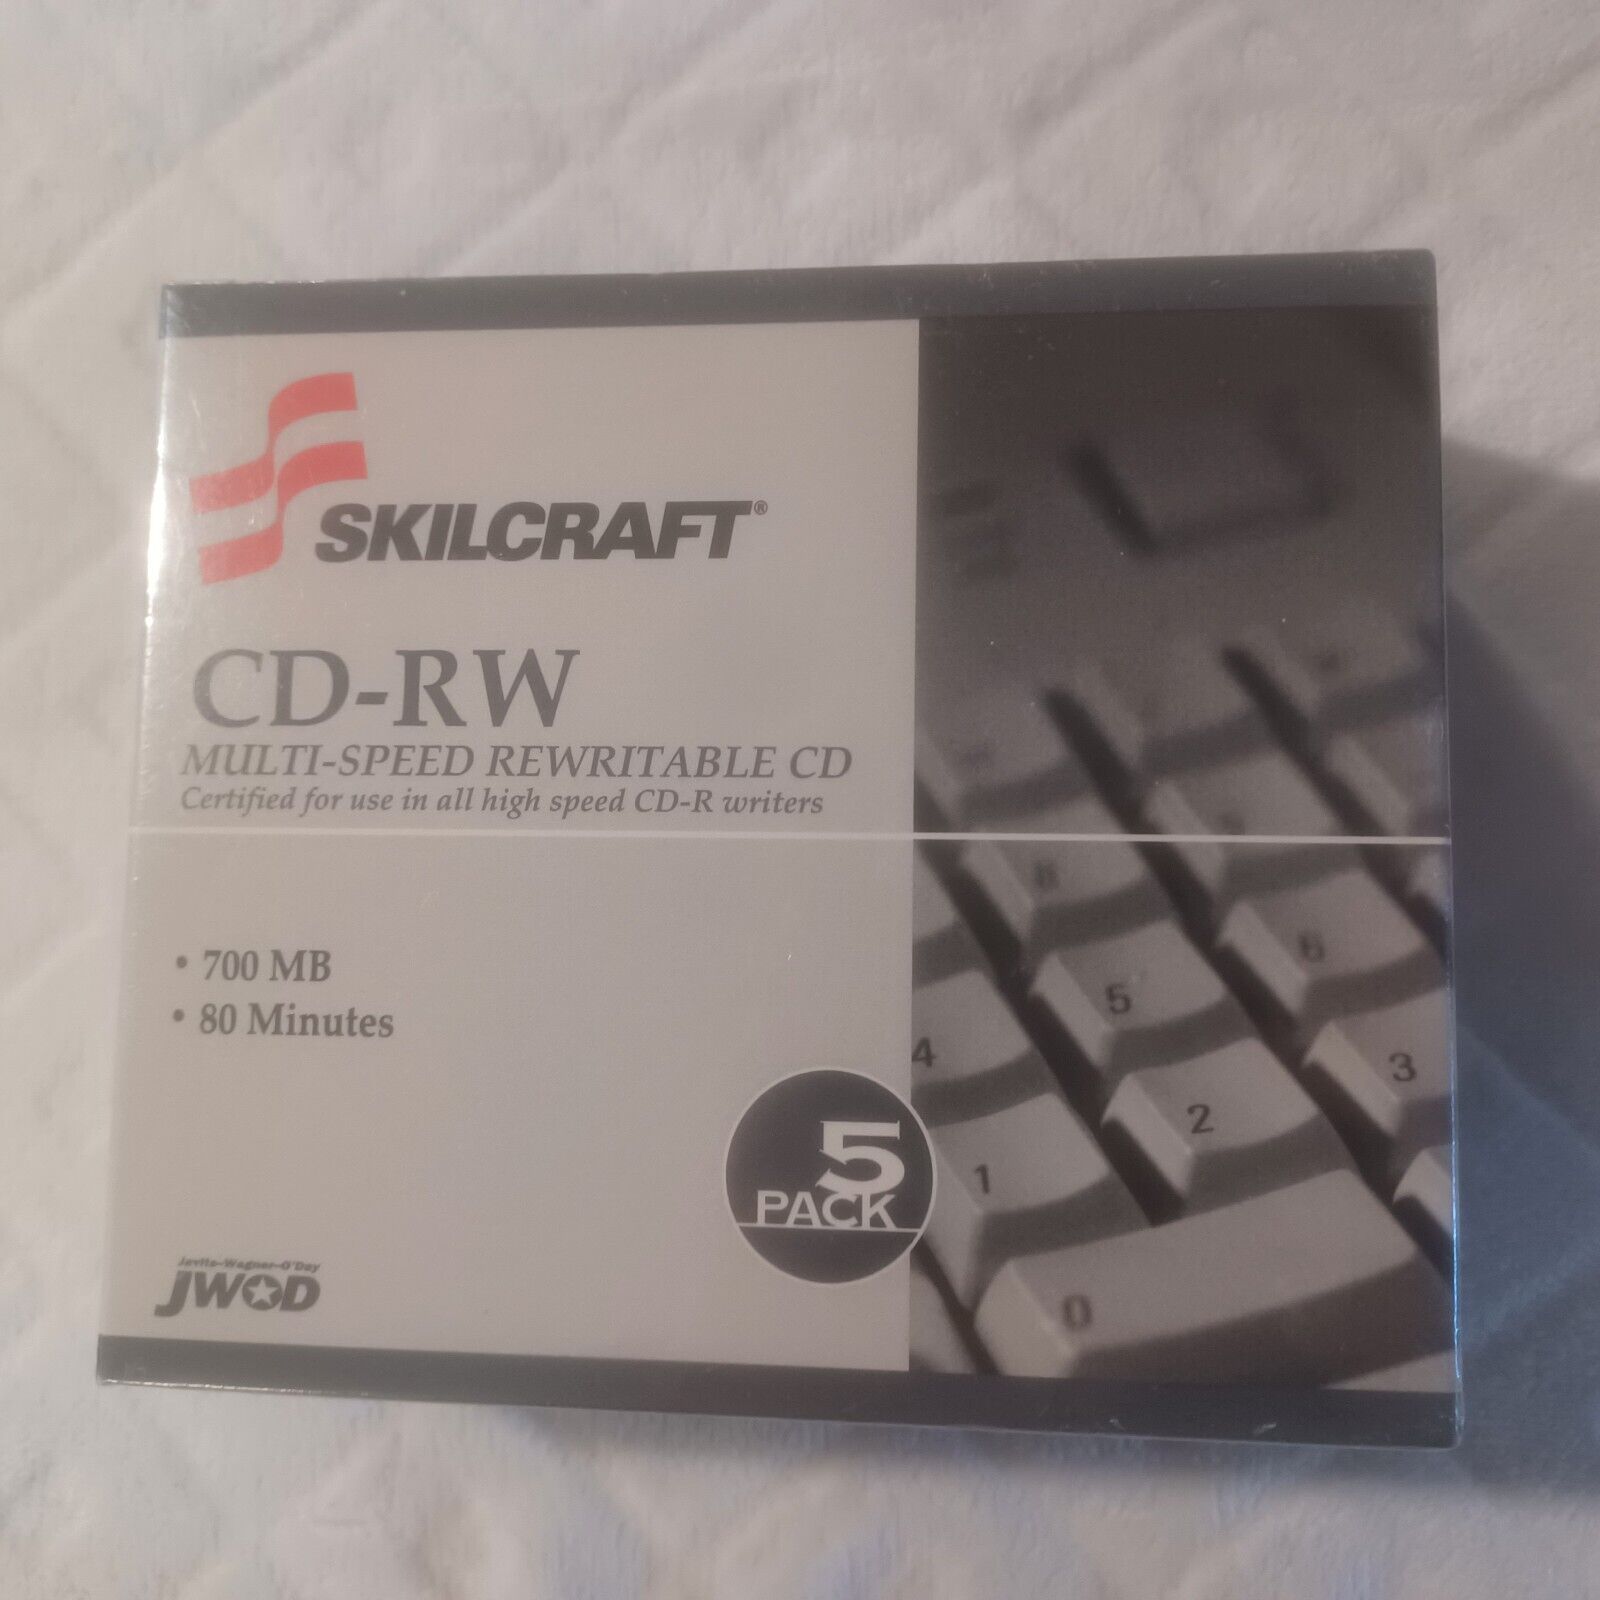 5-pack Skilcraft CD-RW 700 mb 80 Minutes Multi-Speed Rewritable Brand New Sealed